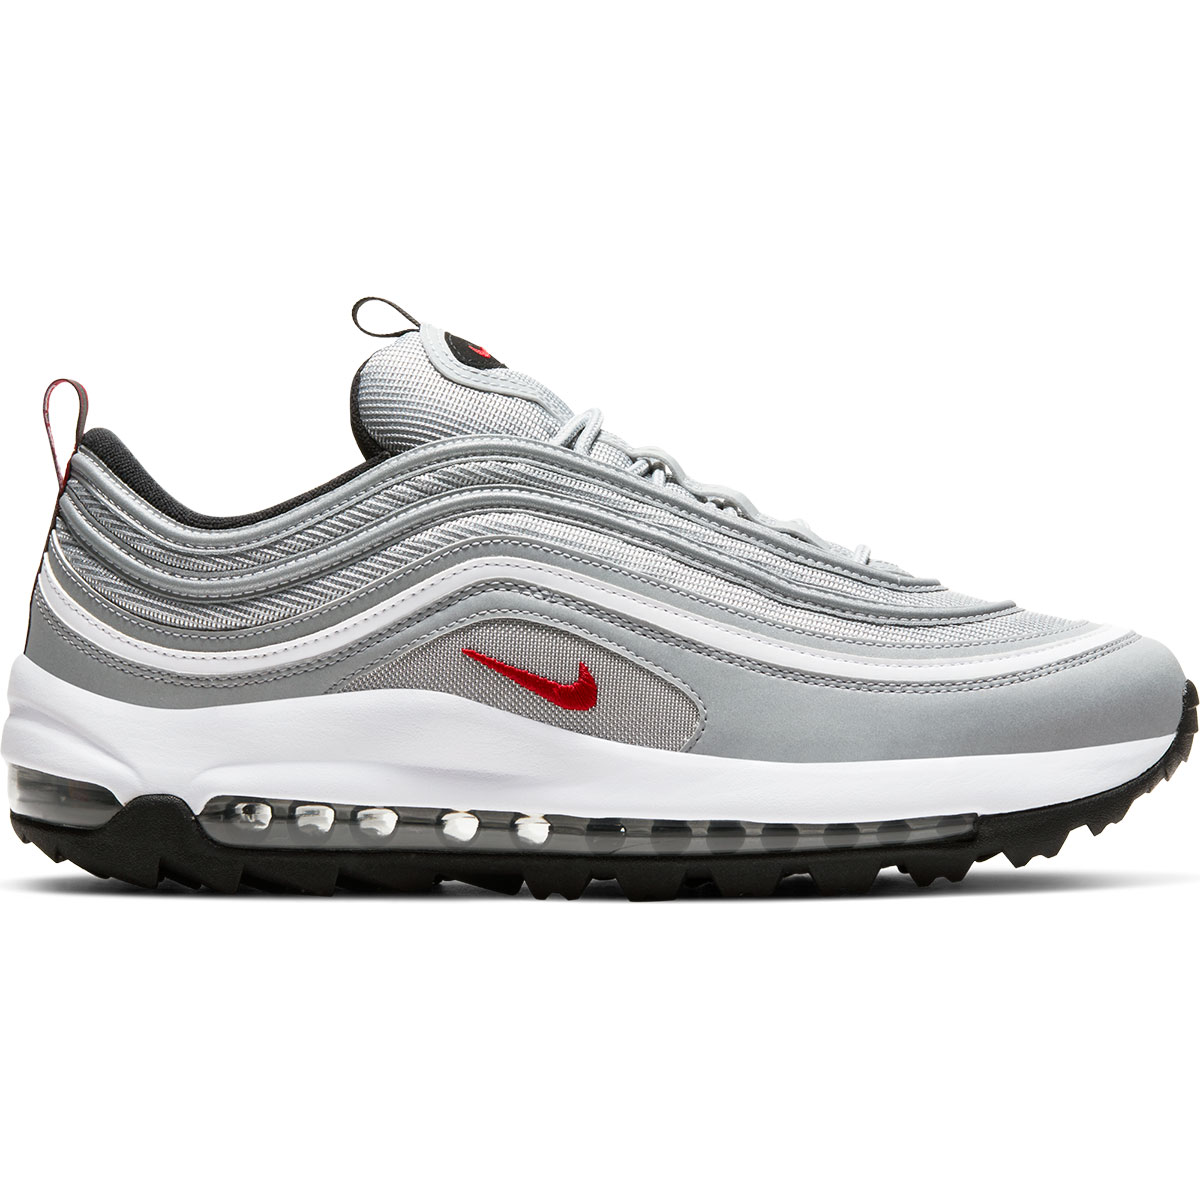 Dictatorship Individuality quarter Nike Golf Air Max 97 G Shoes | Online Golf